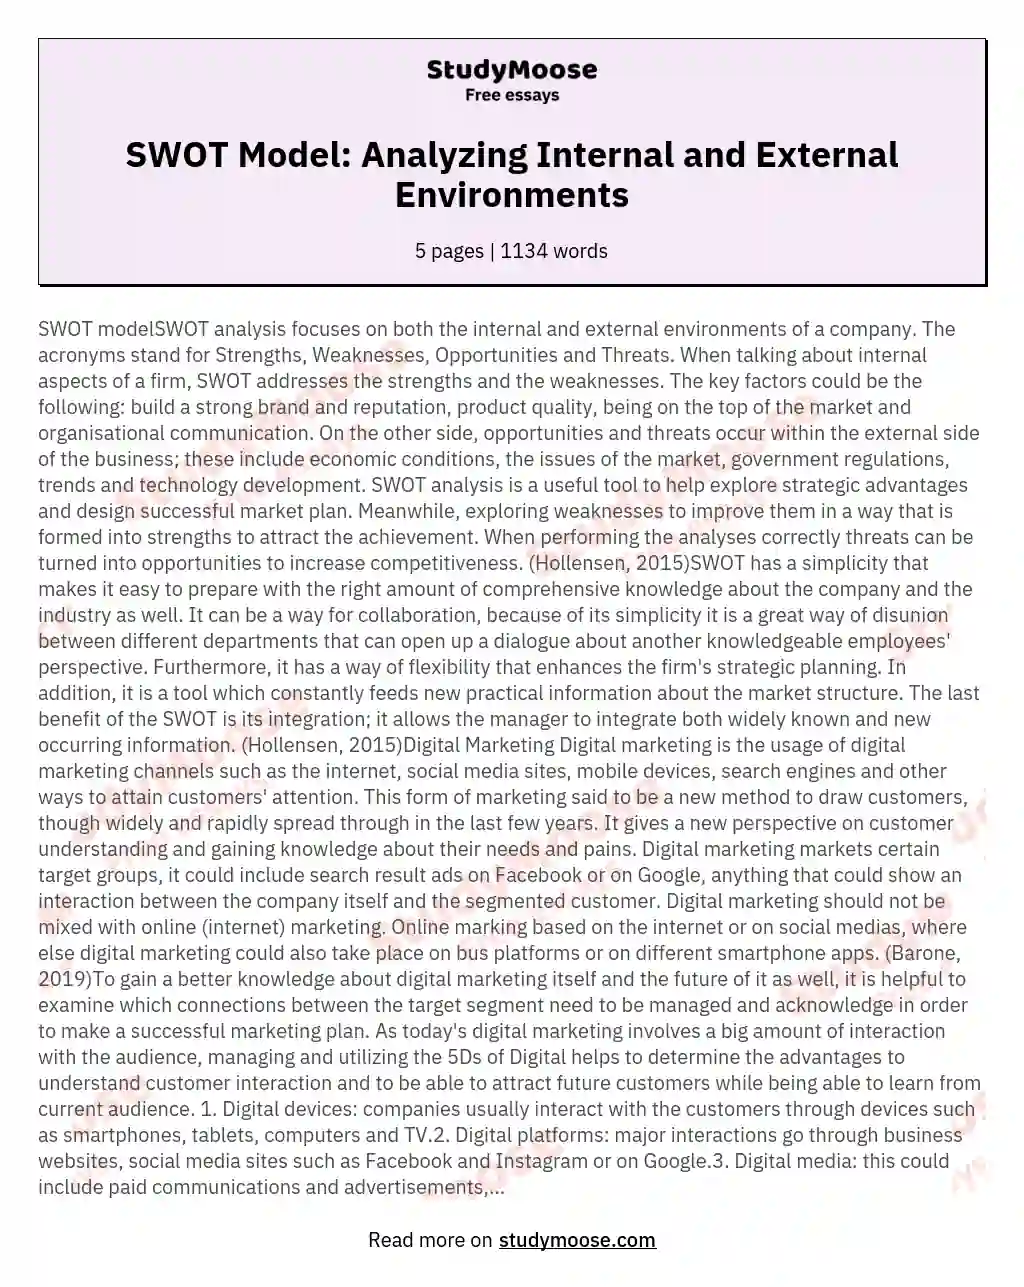 SWOT Model: Analyzing Internal and External Environments essay